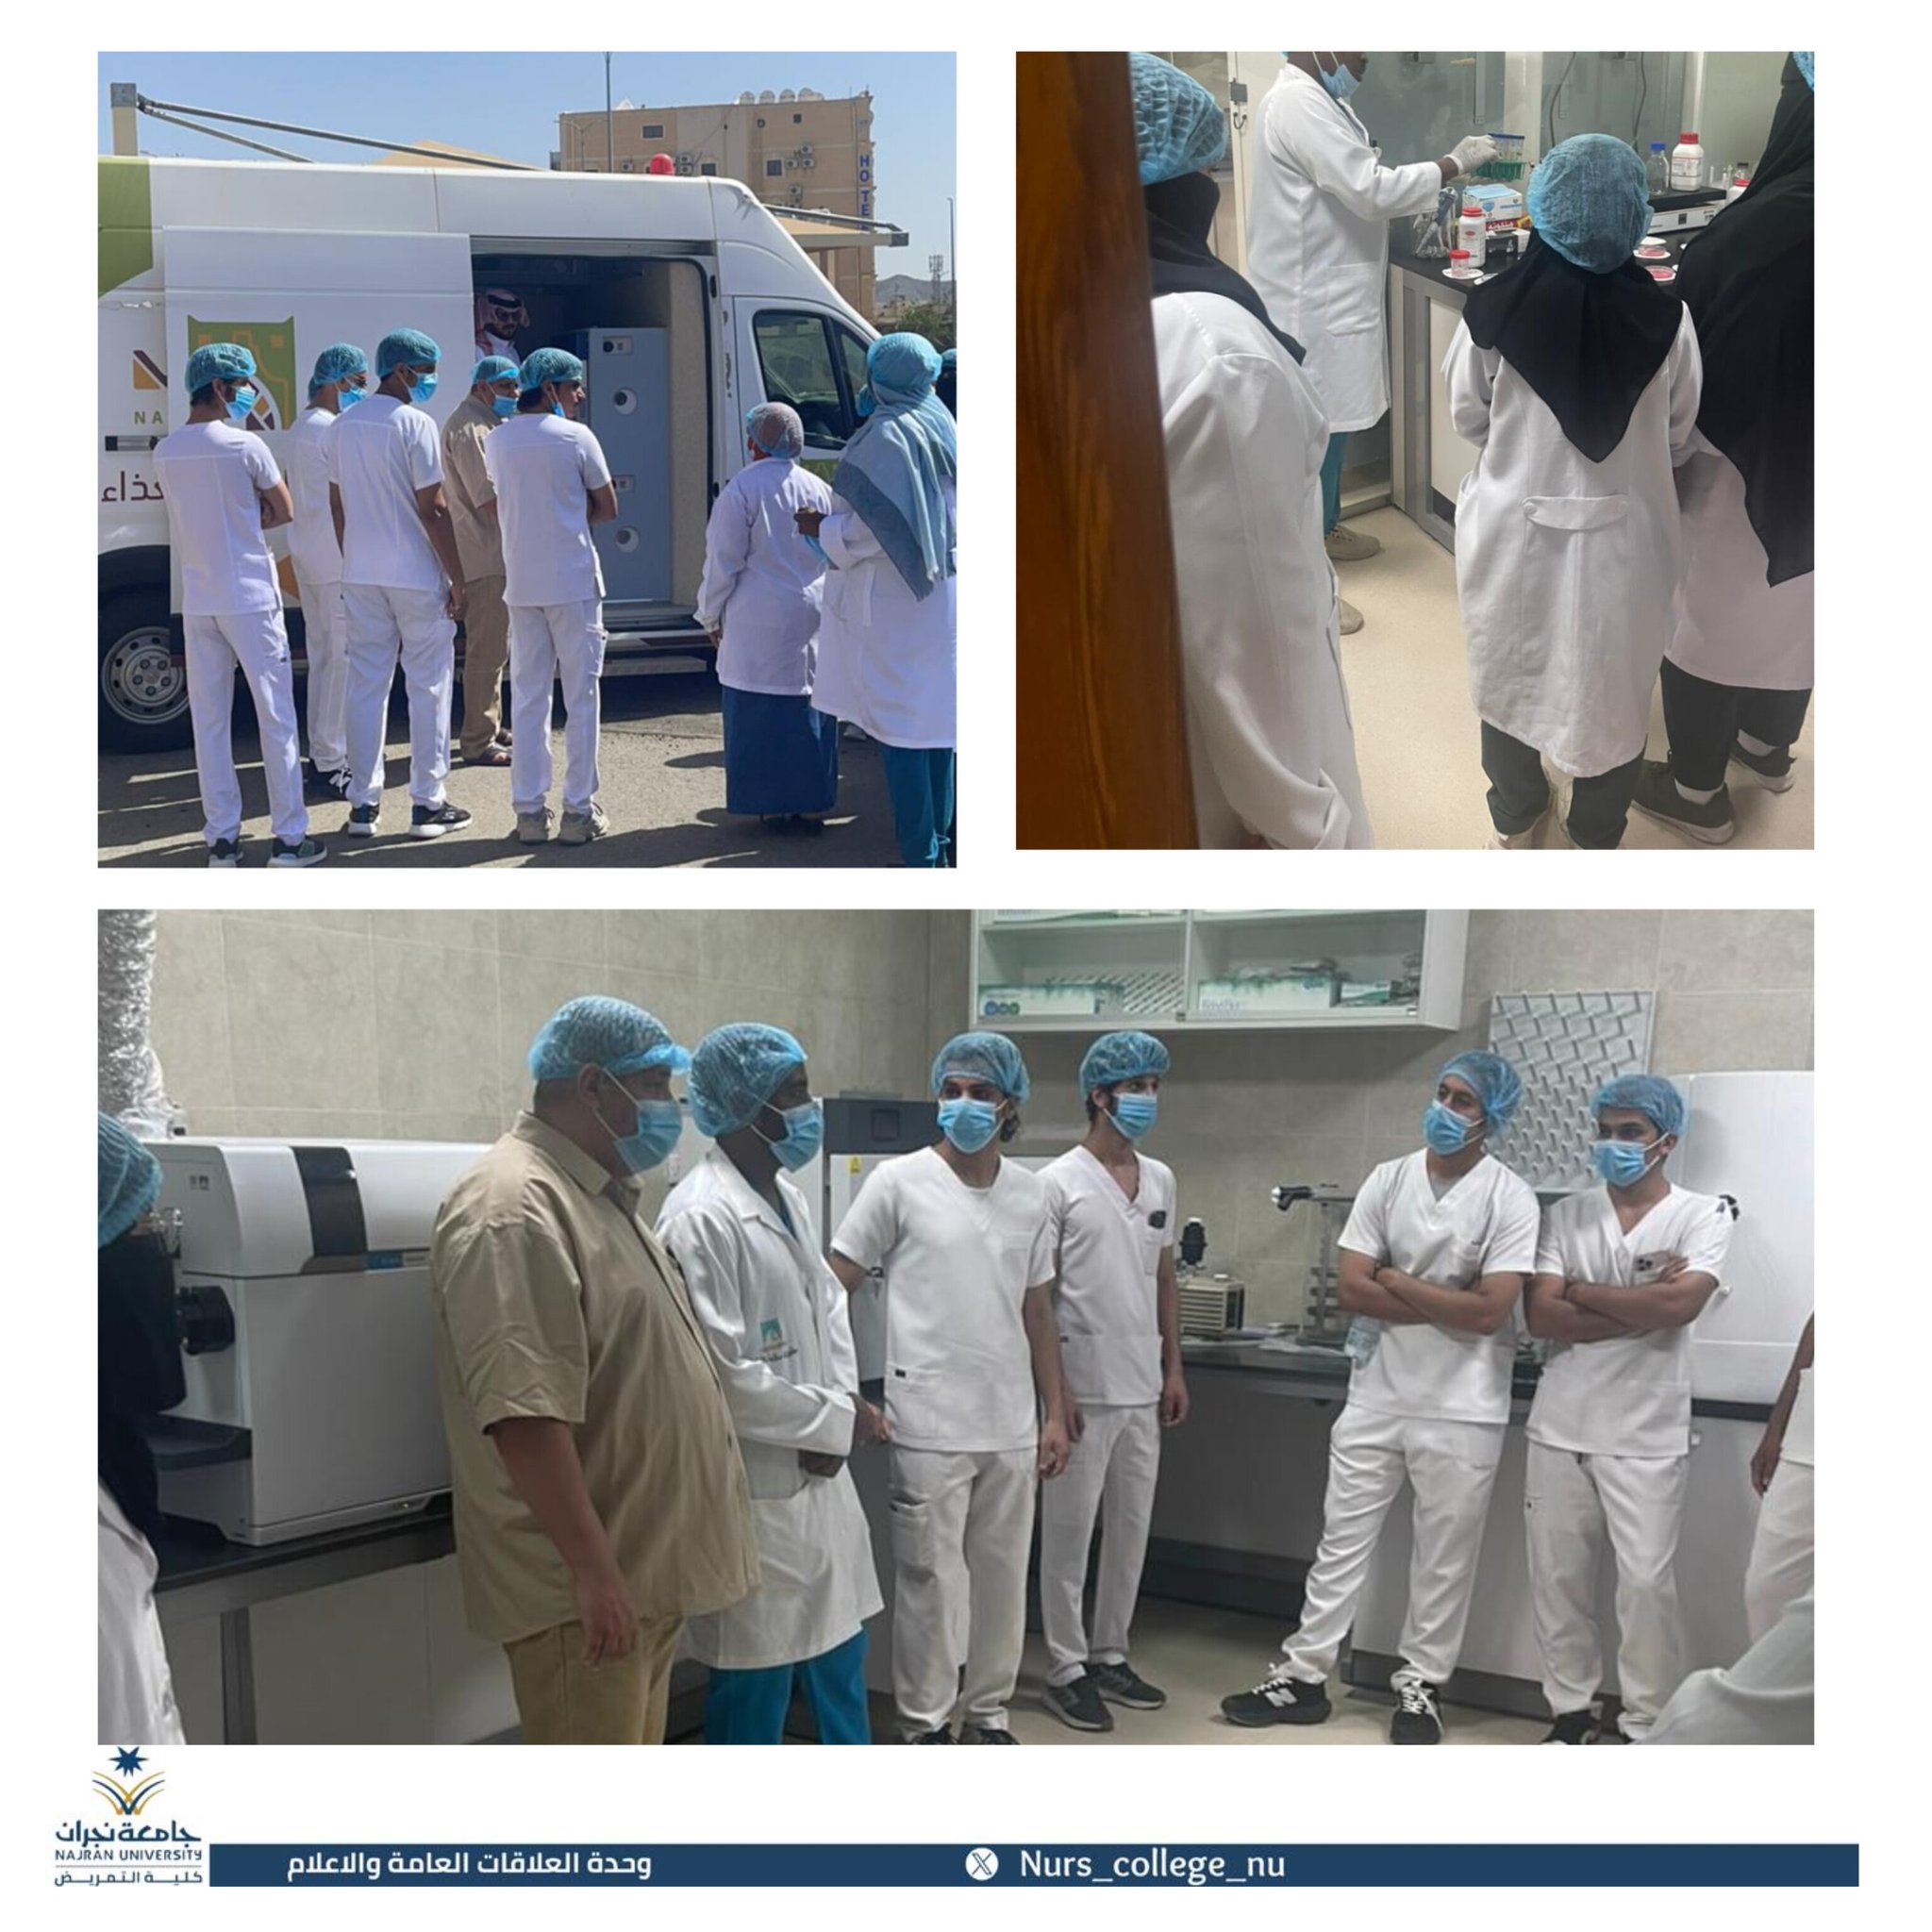 Visit of nursing college students to environmental health laboratories in Penjaran